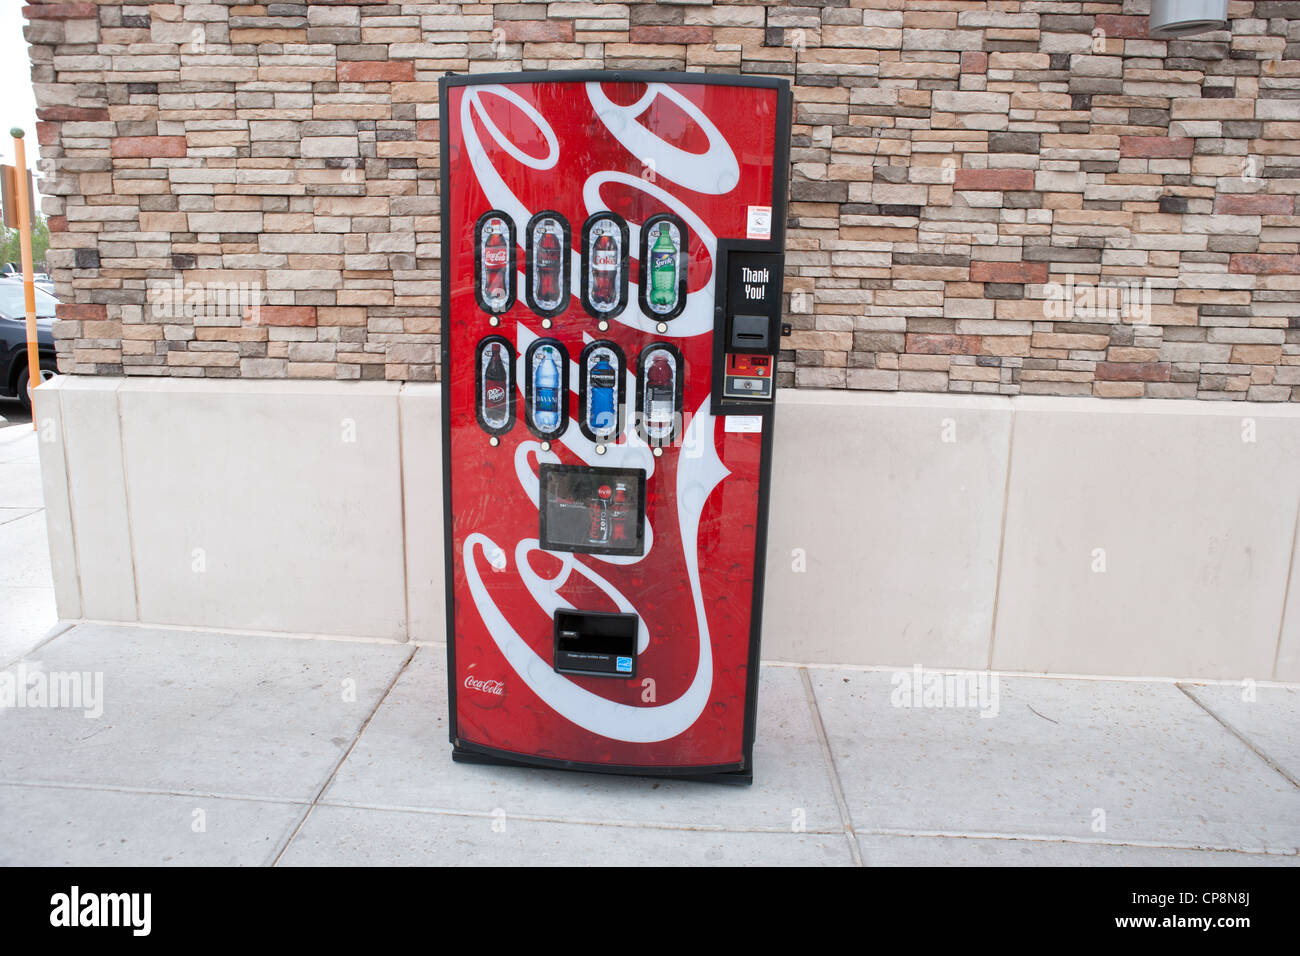 Coca cola vending machine in an outdoor shopping mall. Stock Photo